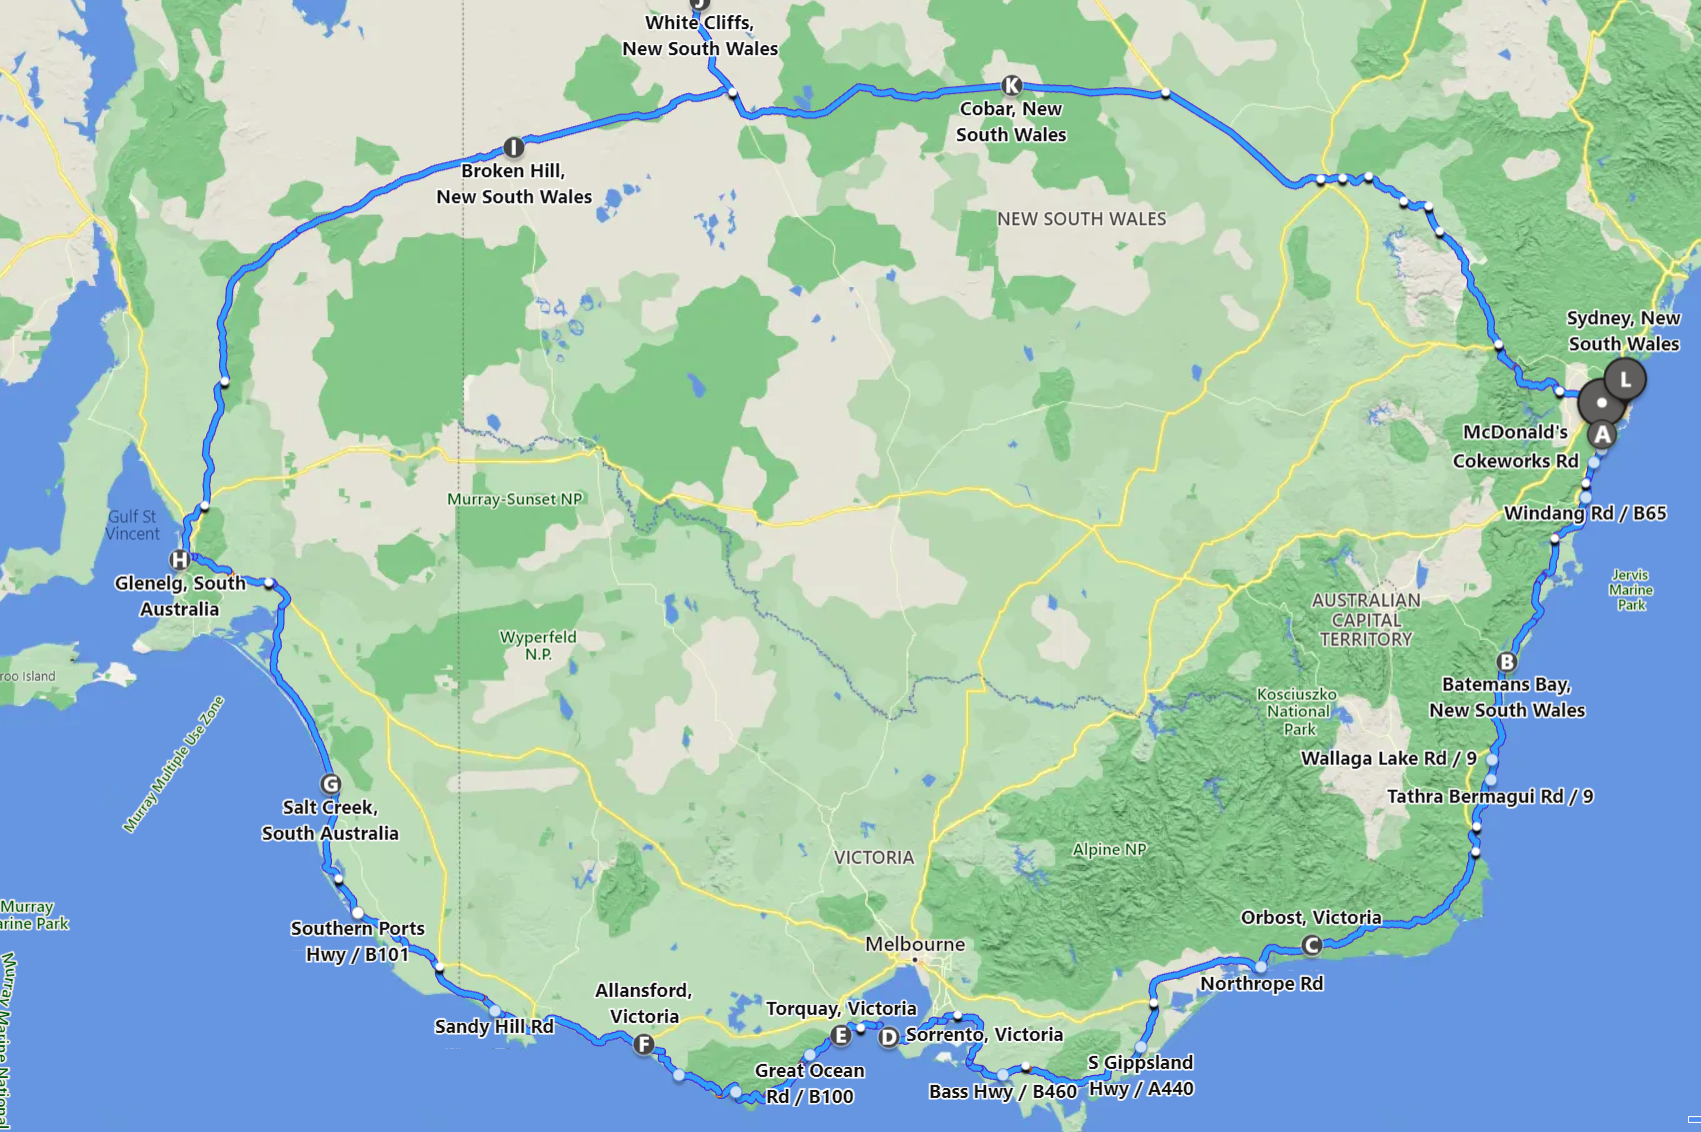 Planning a 4,000km Classic Mercedes road trip